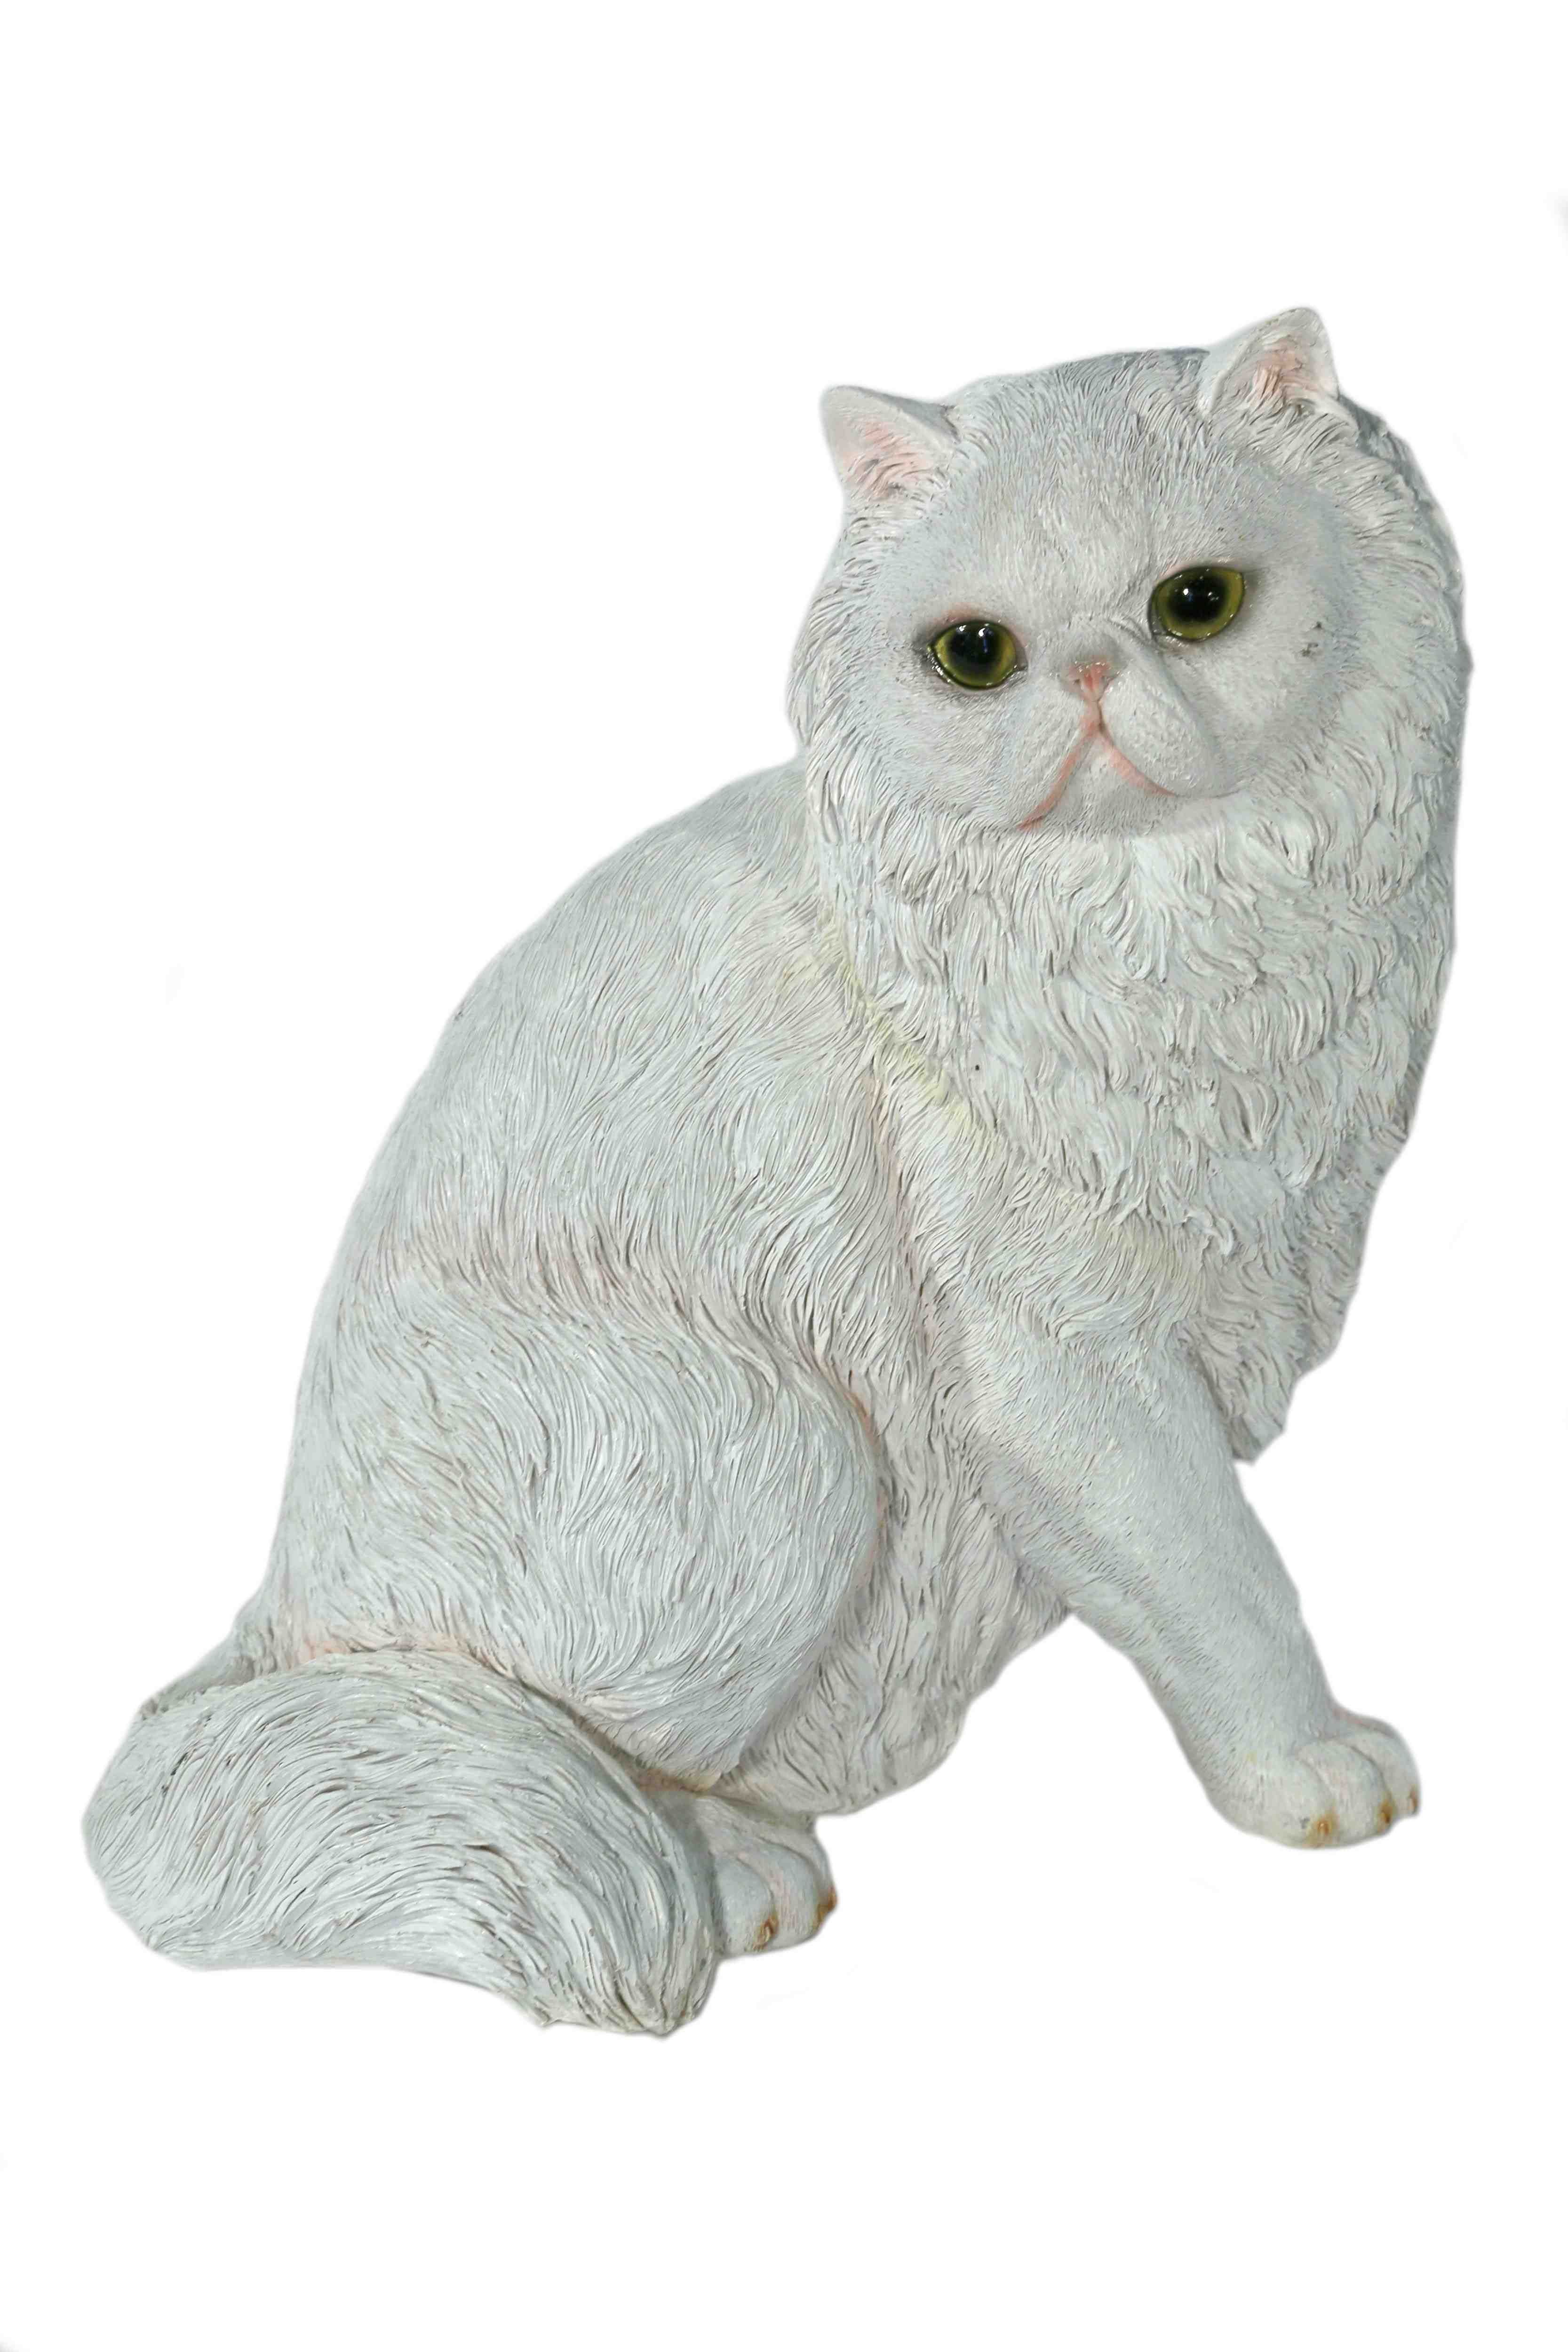 Casa Collection by Jänig Tierfigur Katze weiß, Tierfigur, Katze, Dekofigur aus Polyresin | Tierfiguren